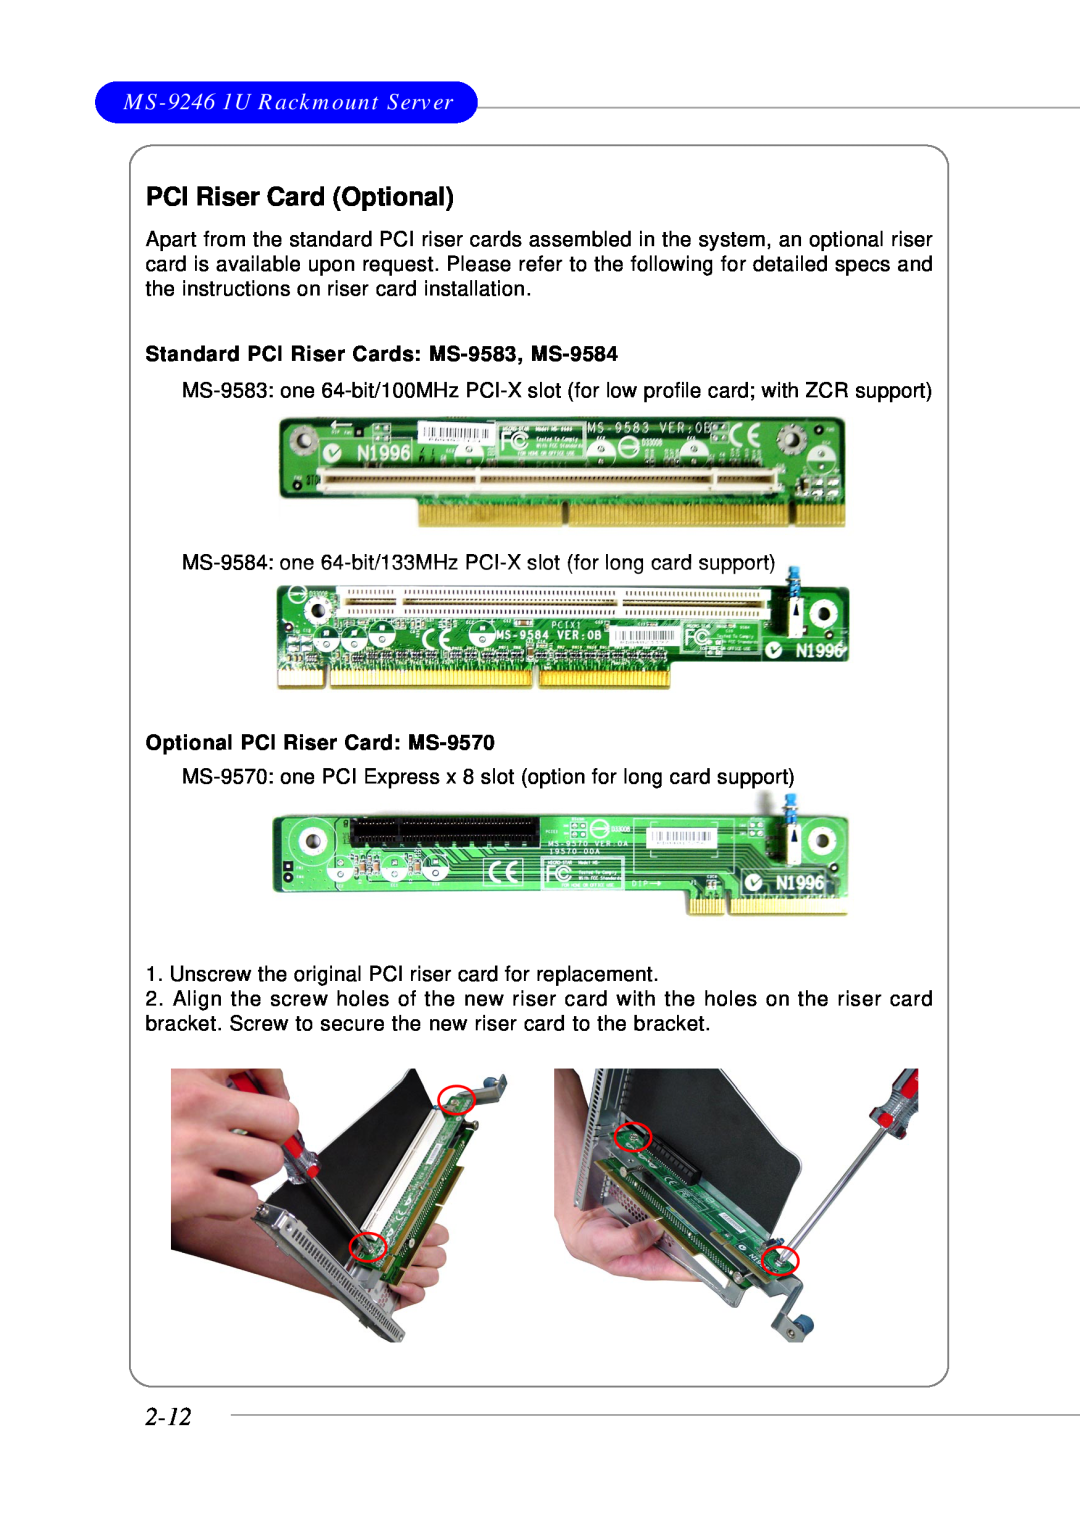 MSI manual 2-12, PCI Riser Card Optional, MS-9246 1U Rackmount Server, Standard PCI Riser Cards MS-9583, MS-9584 